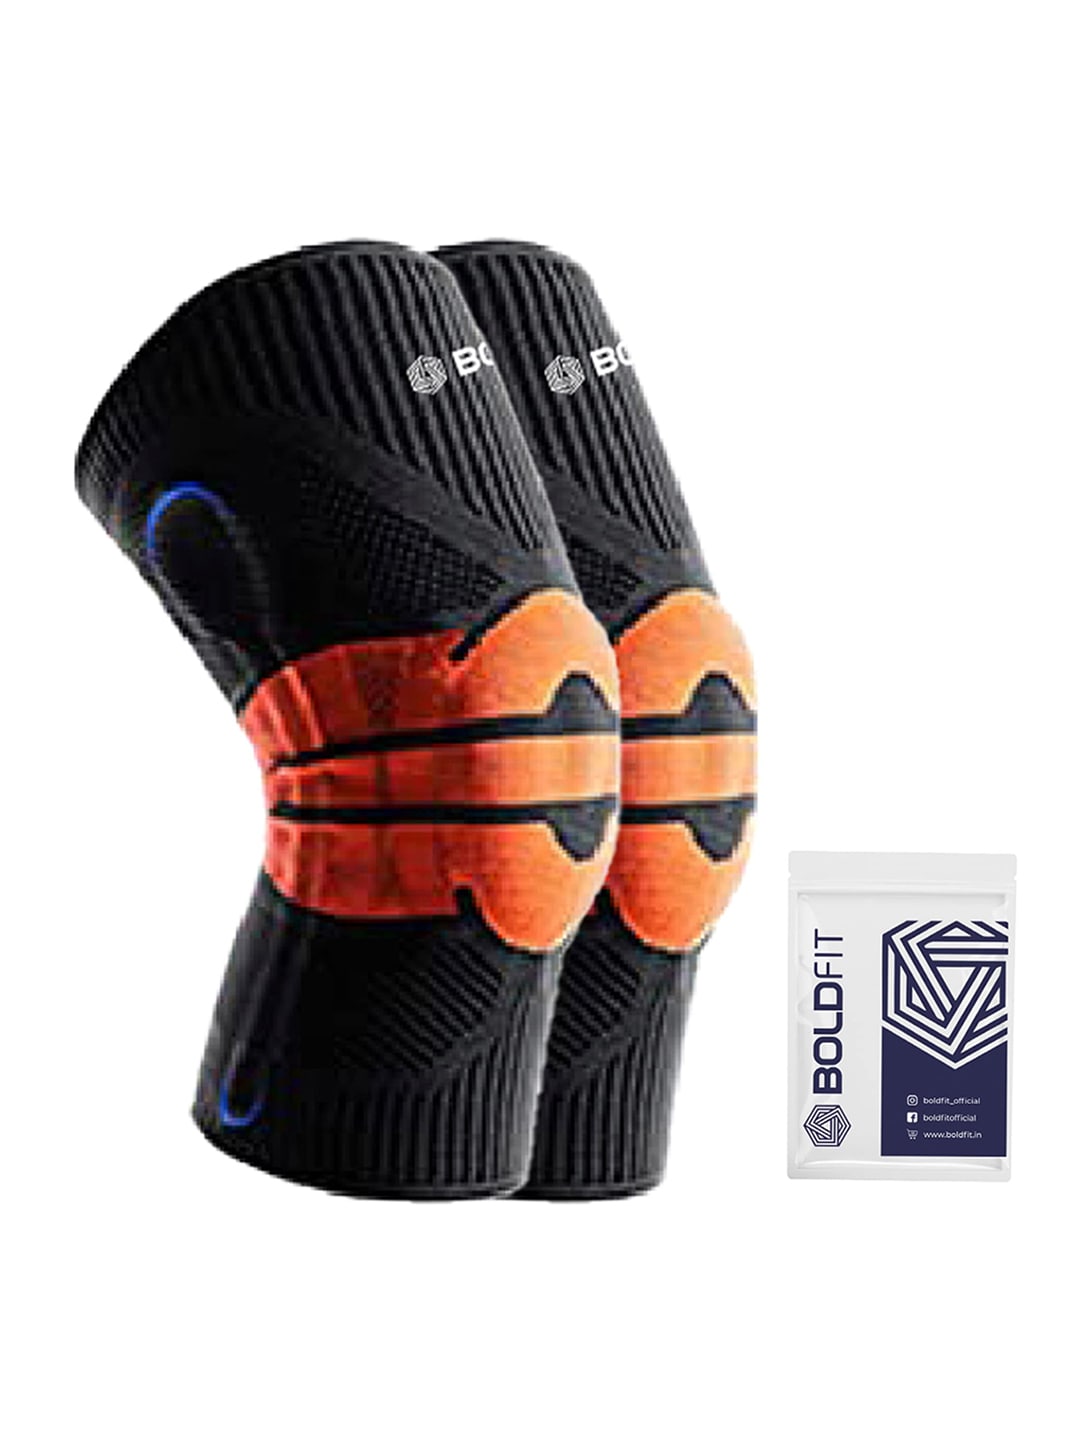 BOLDFIT Unisex Orange & Black Knee Support Sports Accessories Price in India